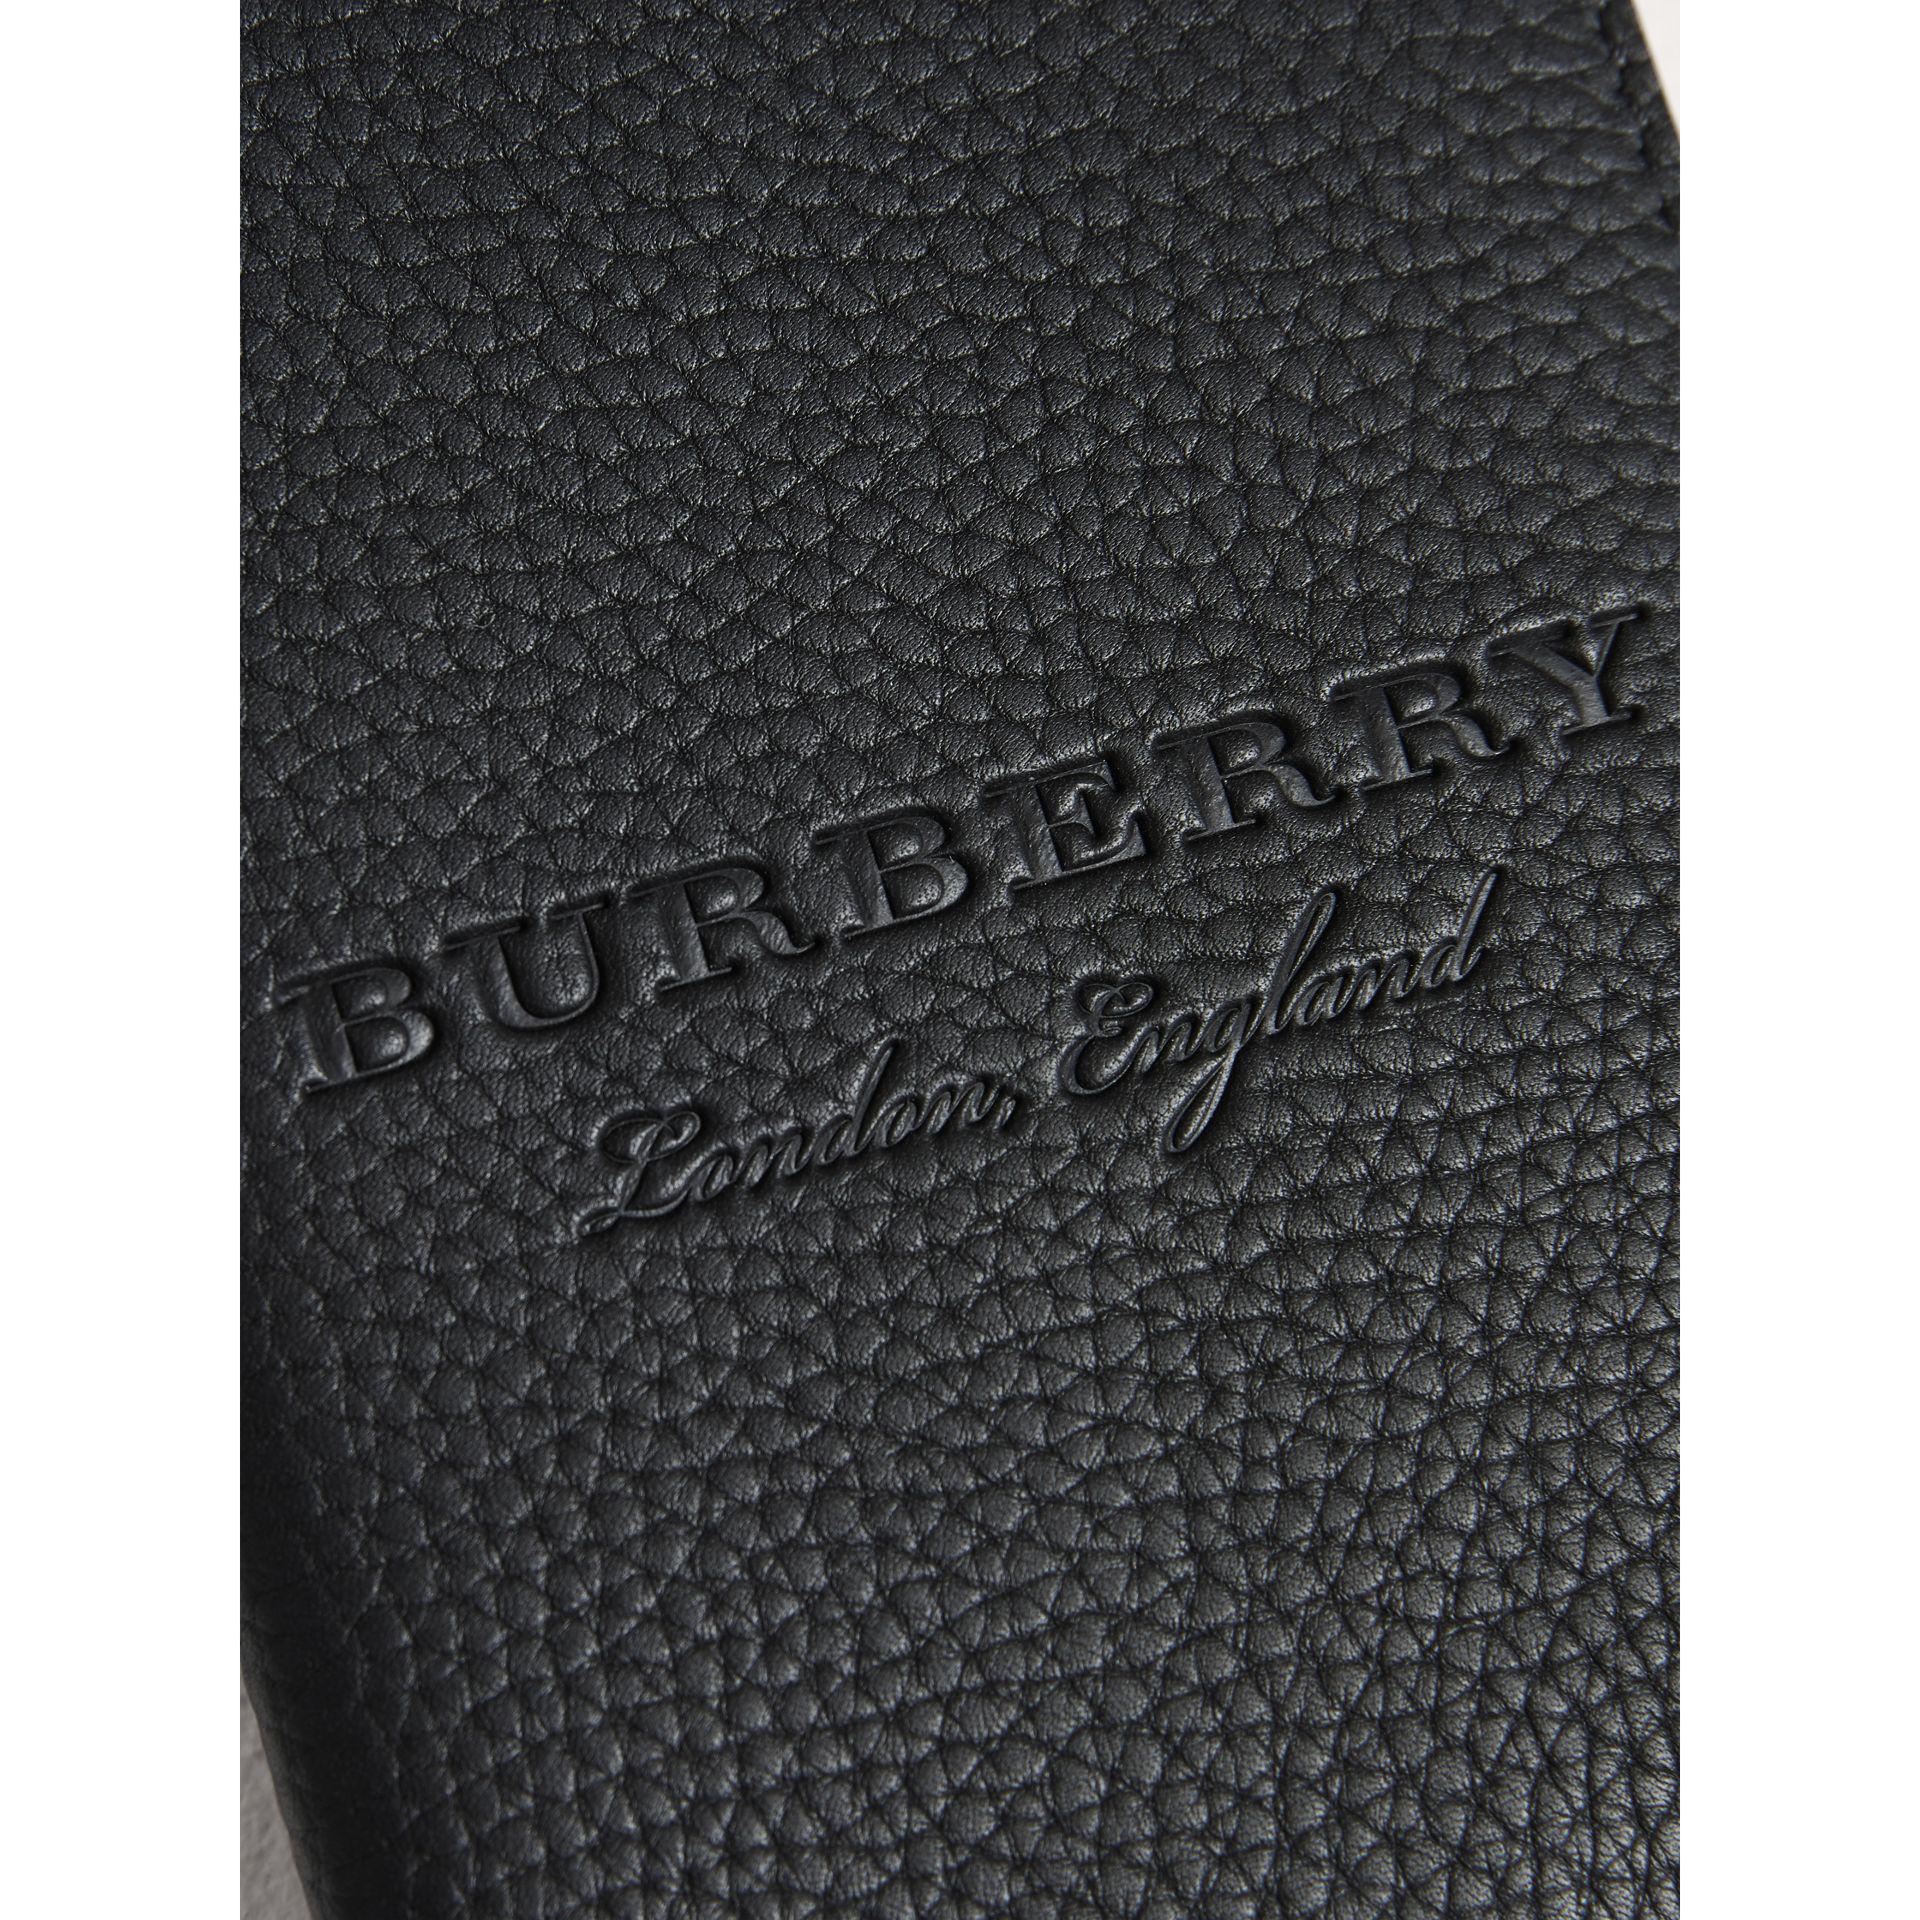 Burberry Embossed Leather Passport Holder in Black for Men - Lyst